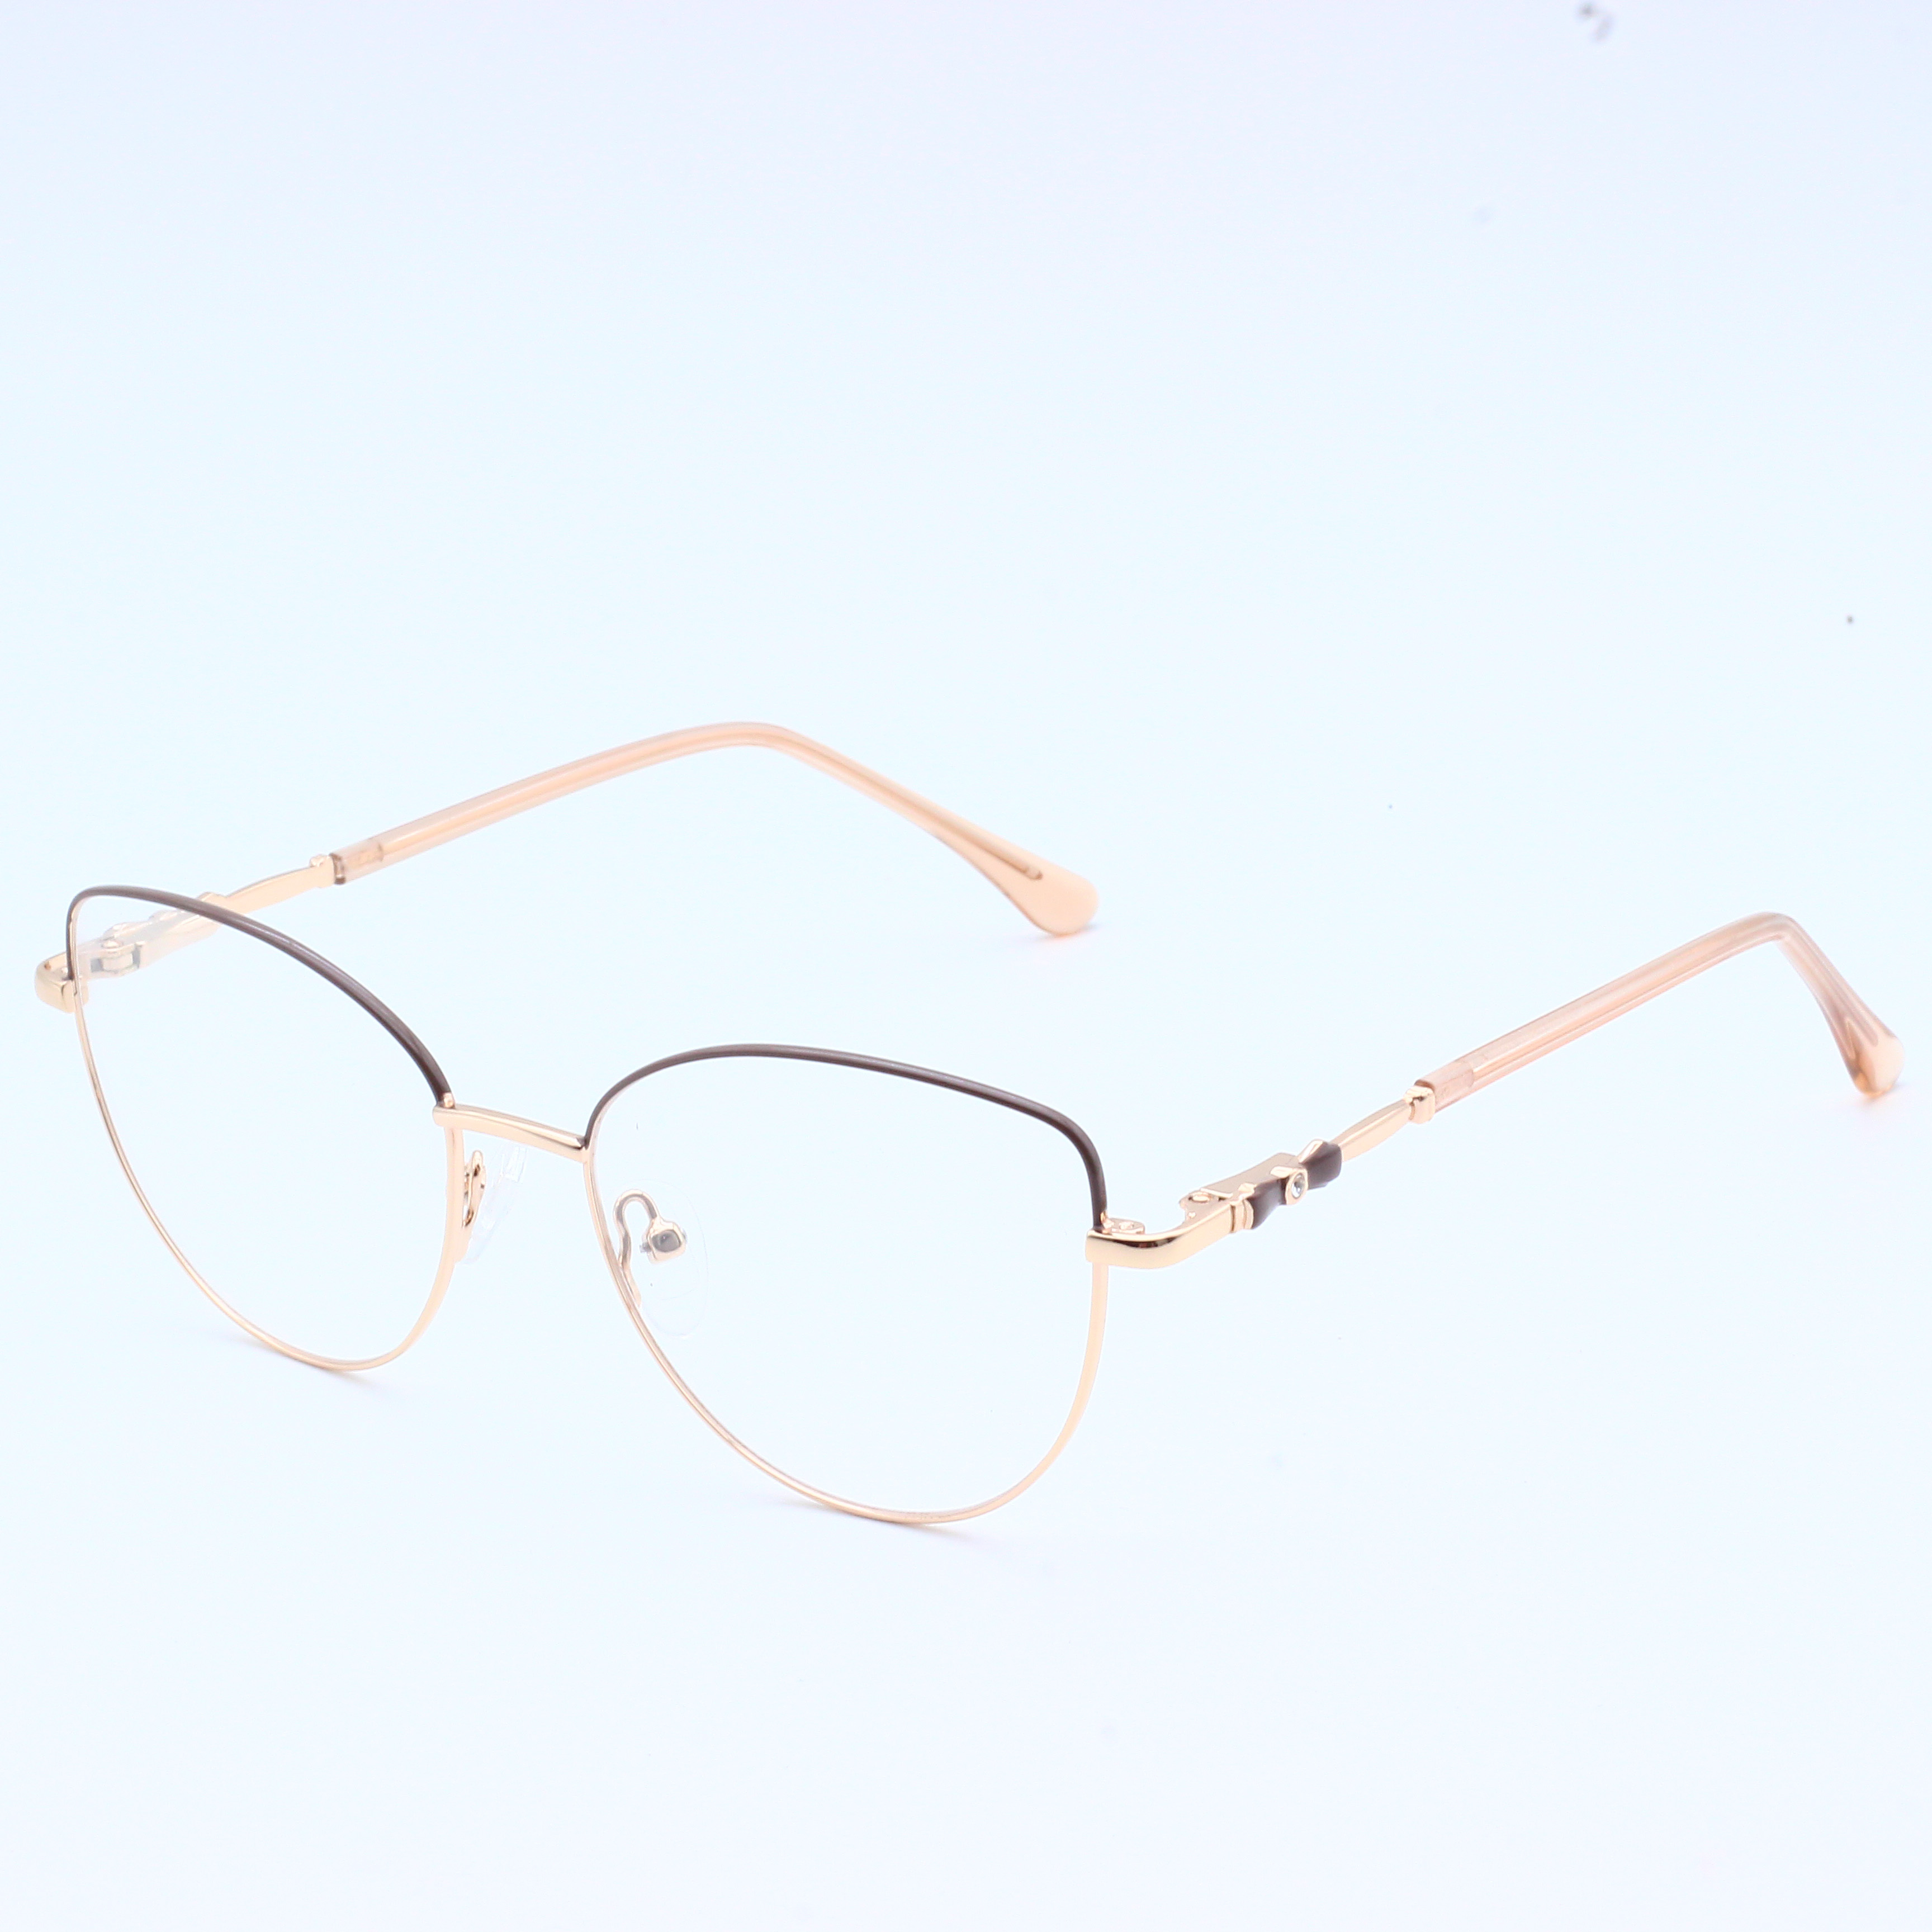 Stock clearance metal optical glasses frame random stainless metal (7)